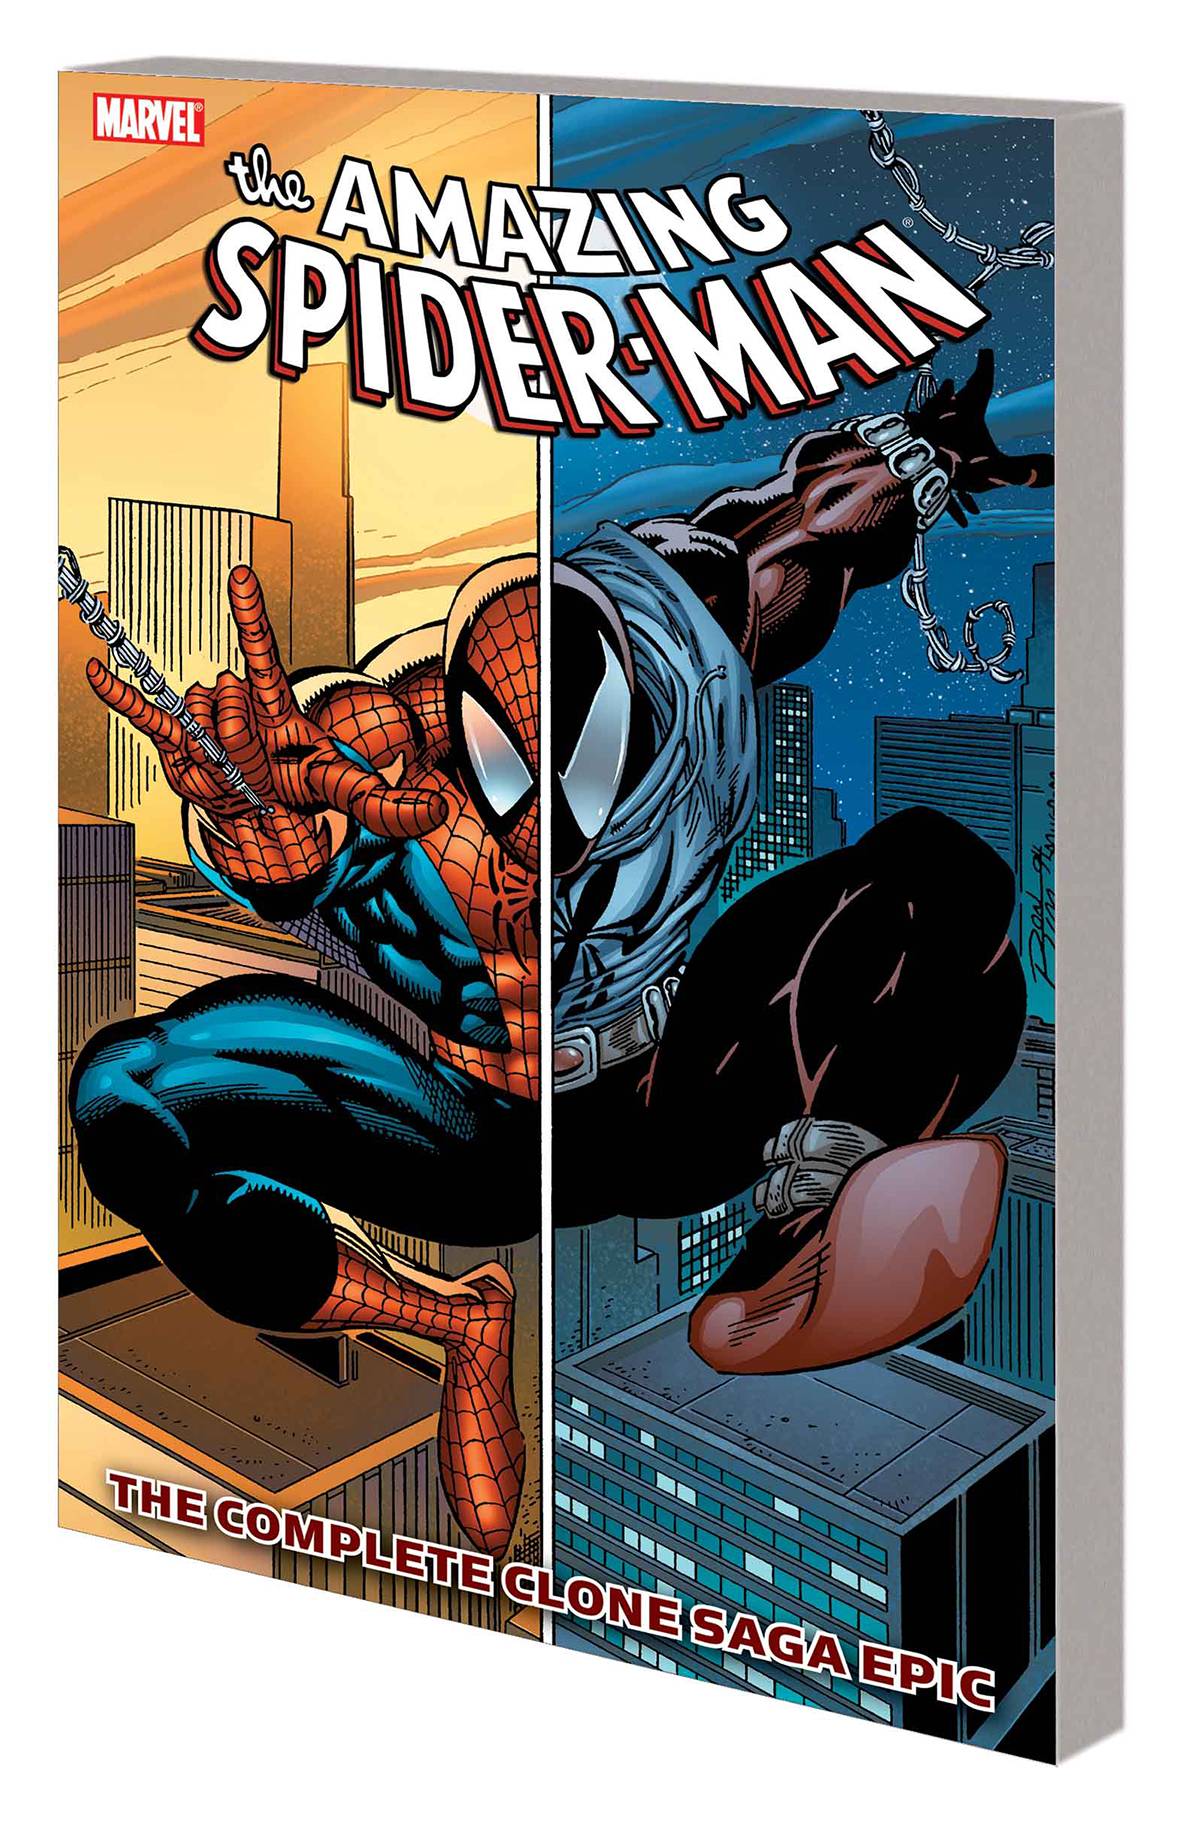 The amazing spider-man the complete clone saga epic